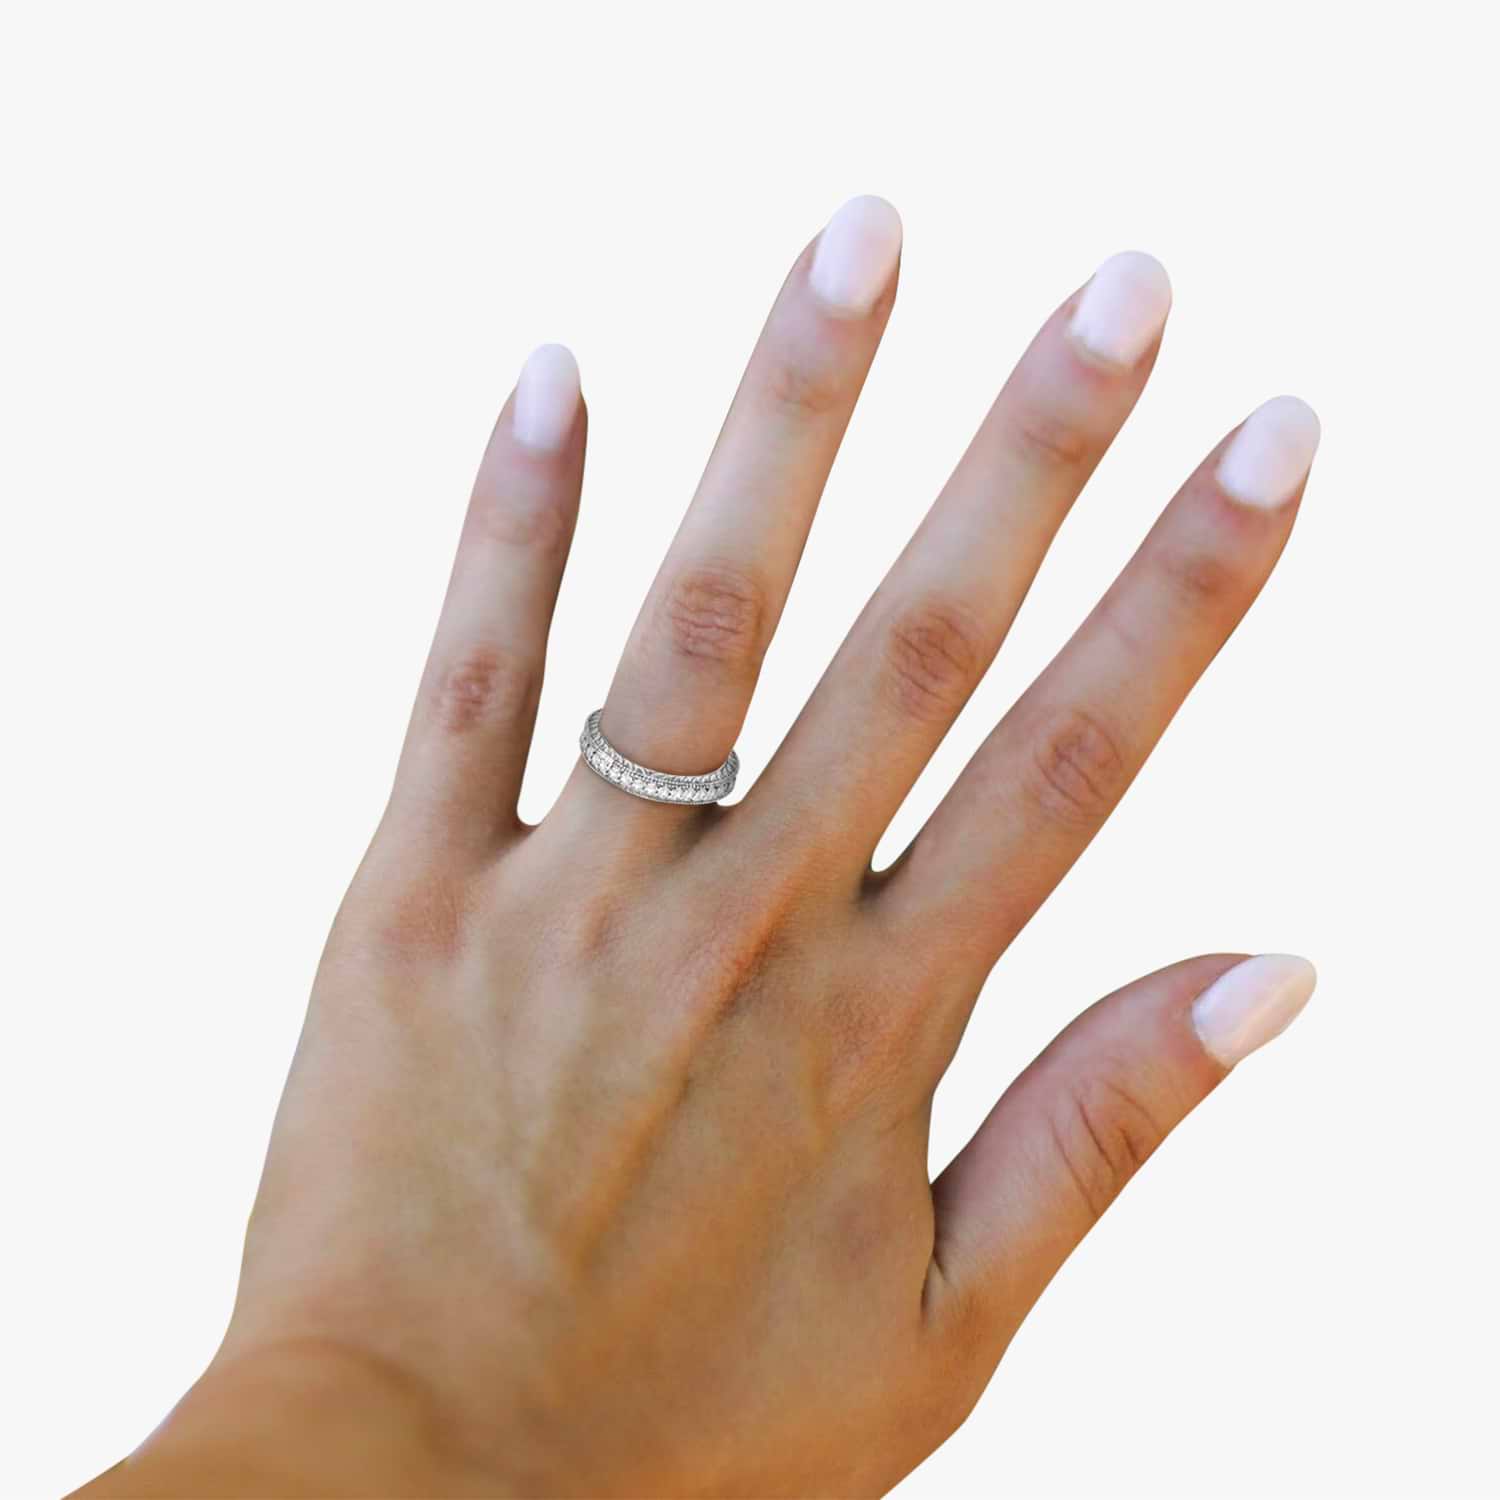 0.39 Carat Louis Vuitton Diamond and White Gold Ring, Flexible